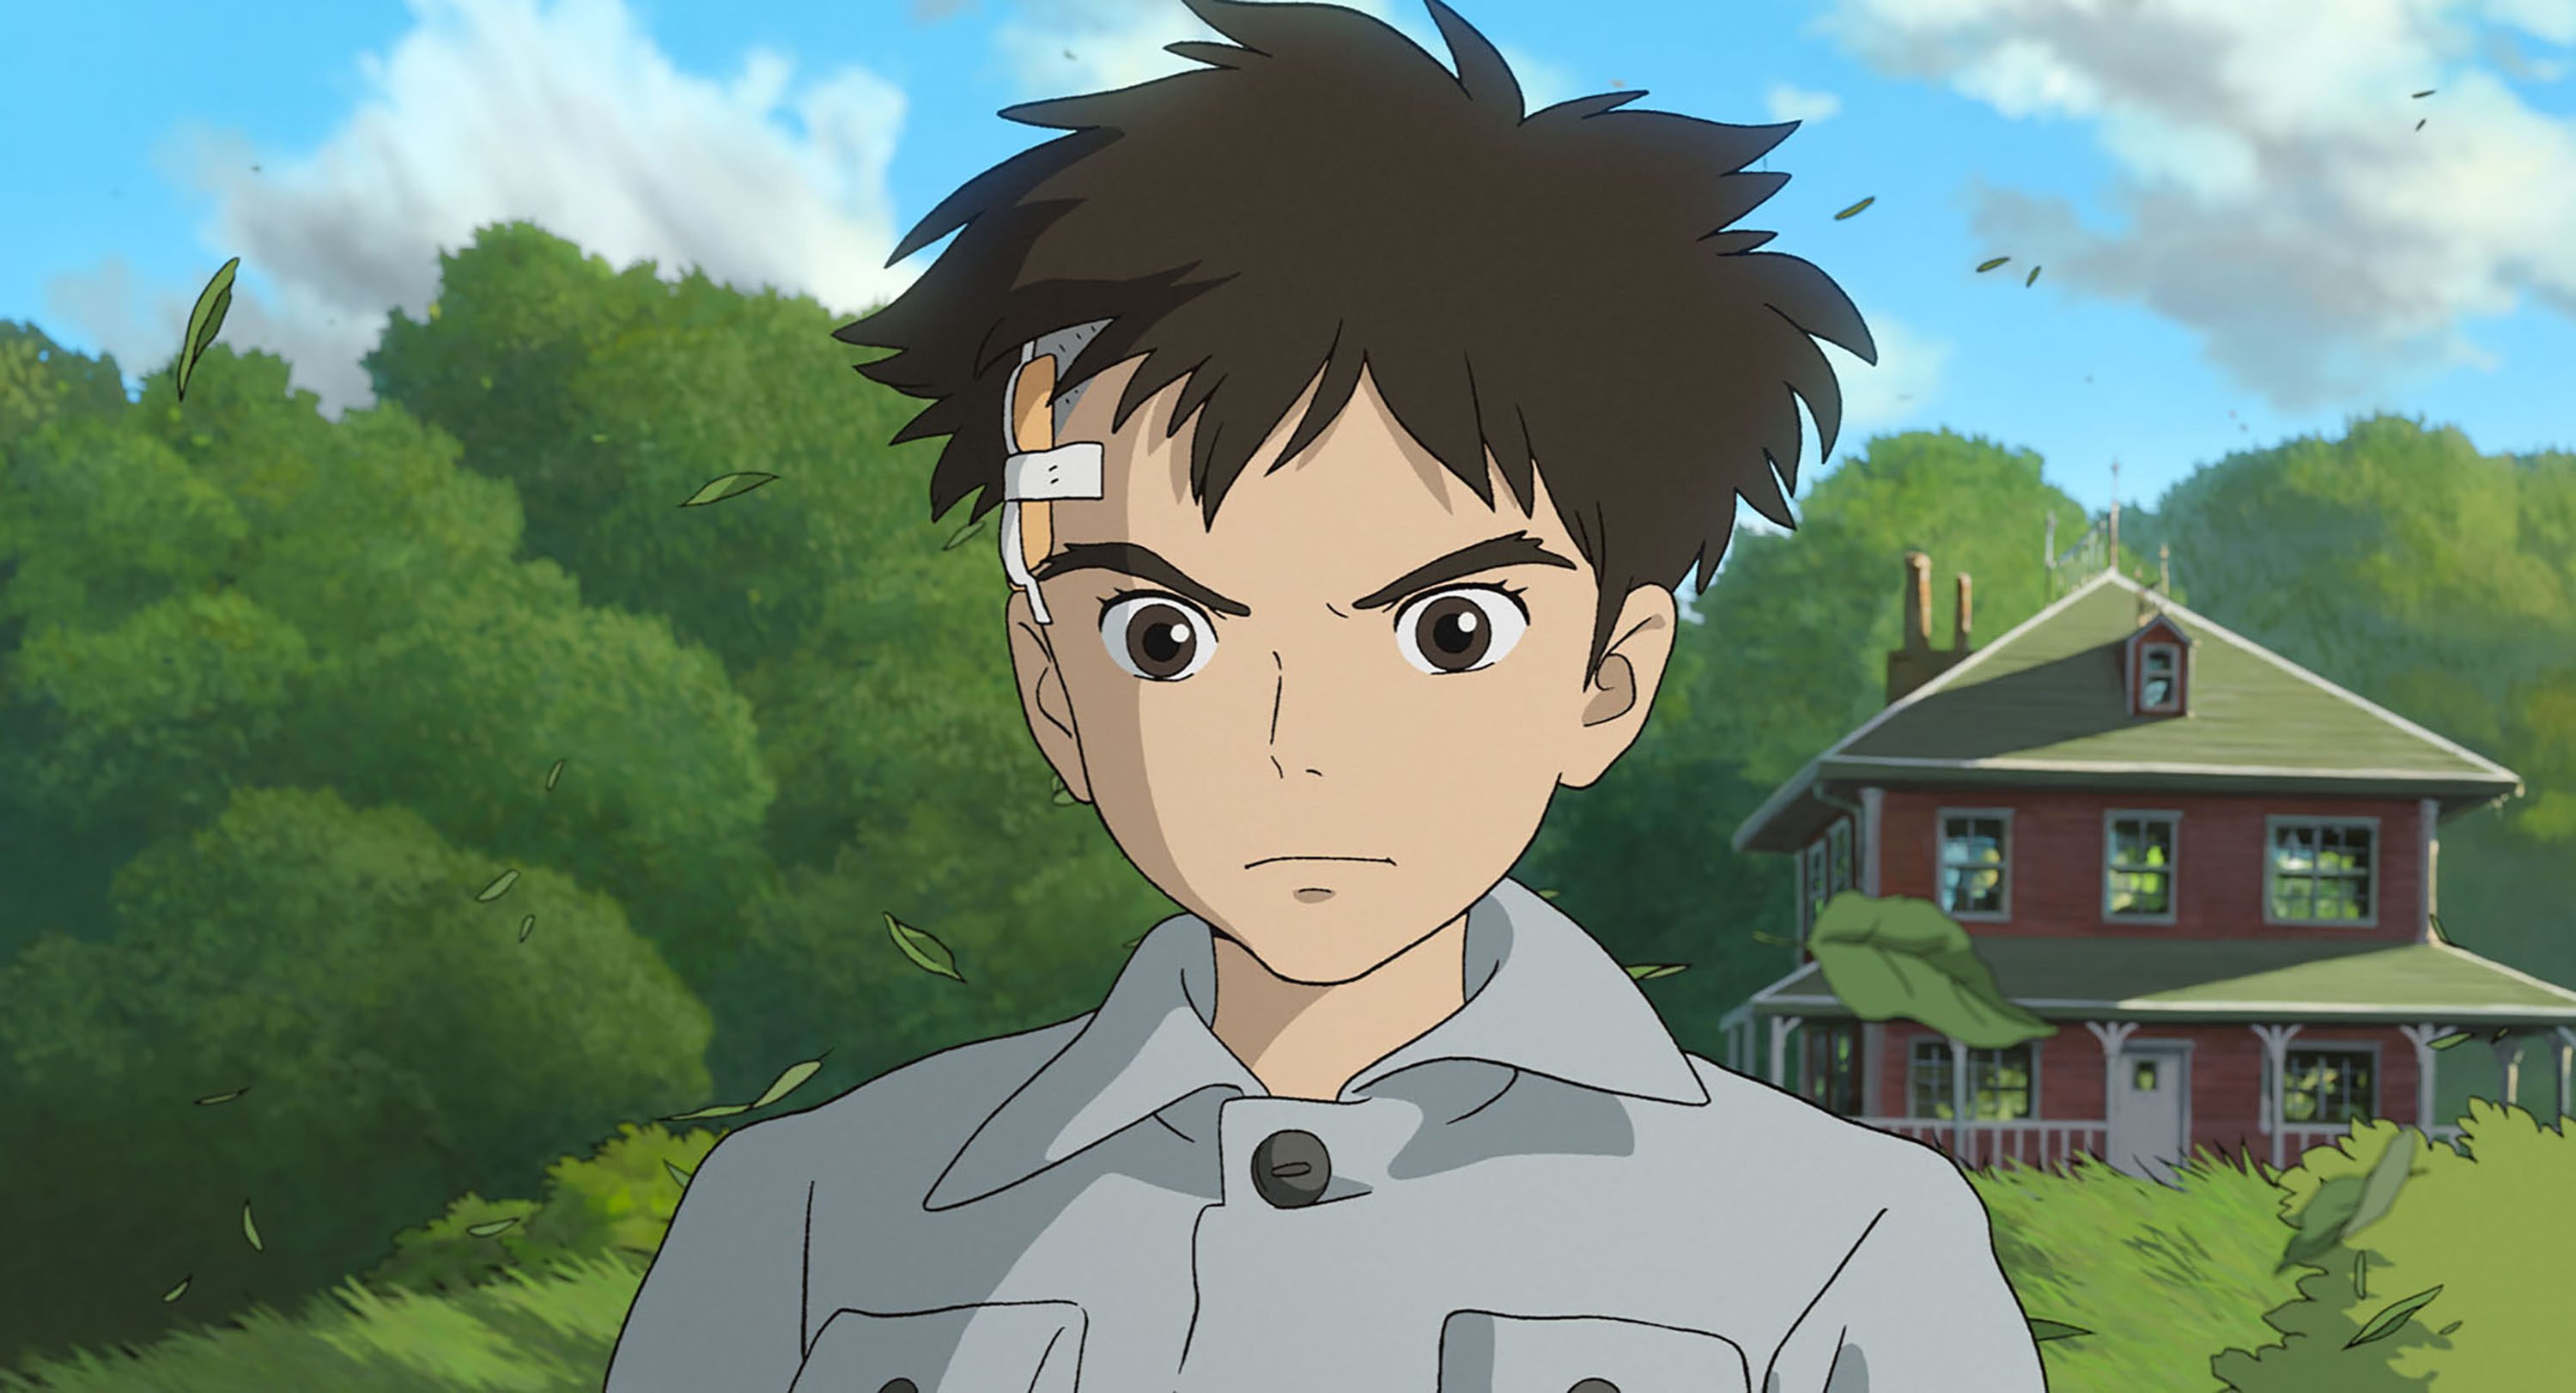 Octogenarian Japanese anime master Miyazaki tops U.S. box office